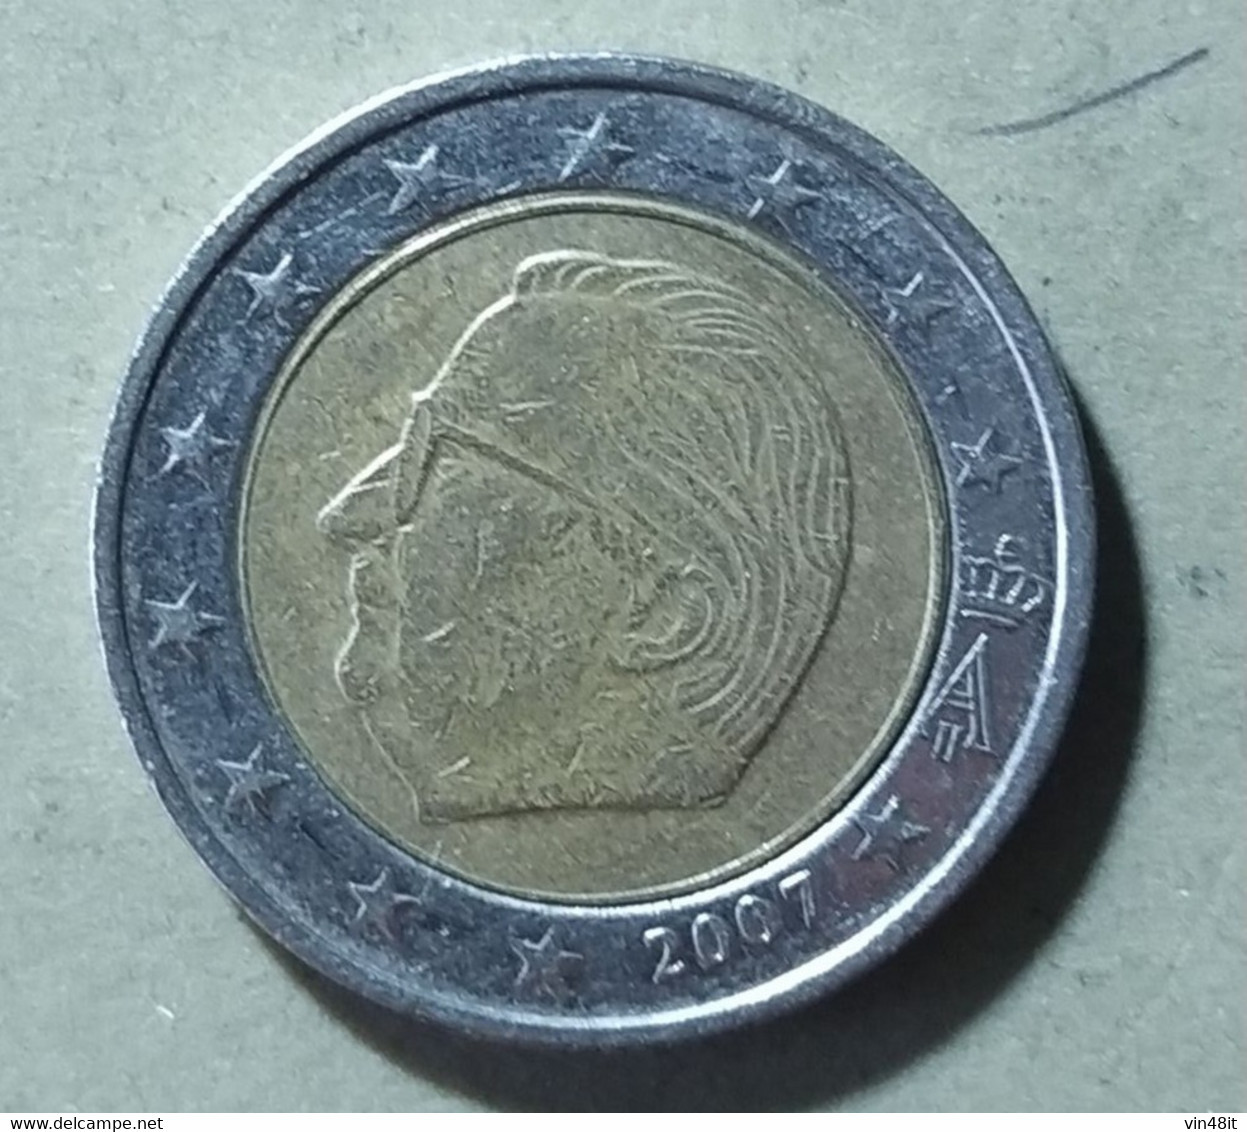 2007 - BELGIO - MONETA IN EURO - DEL VALORE DI  2,00   EURO  - USATA - Belgio